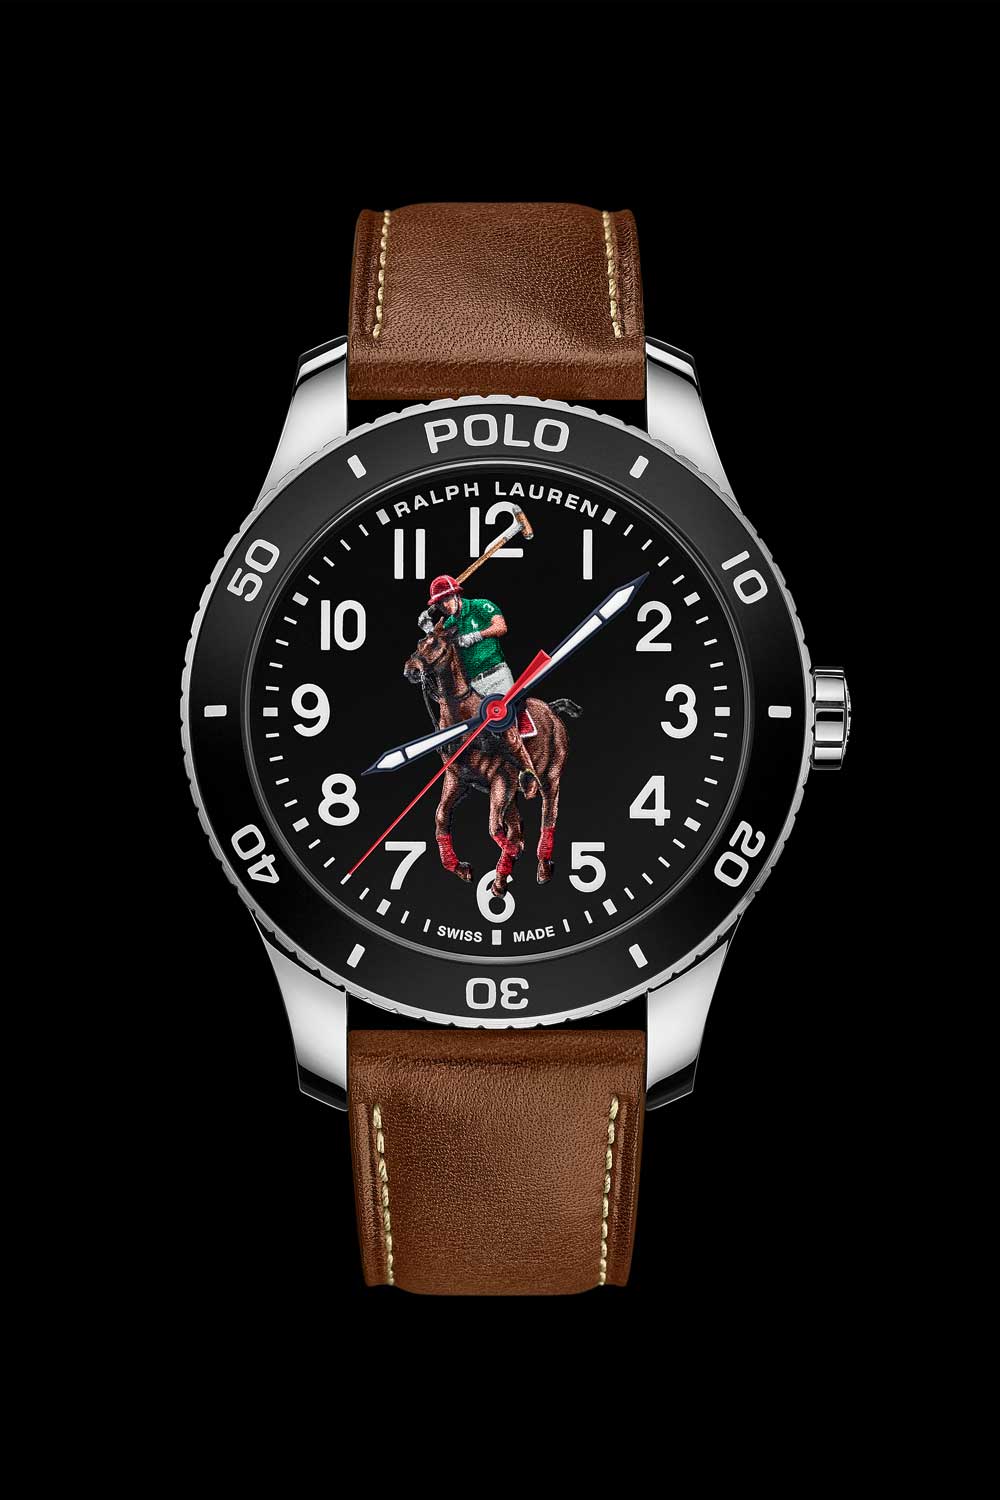 Ralph Lauren Polo Watch Collection